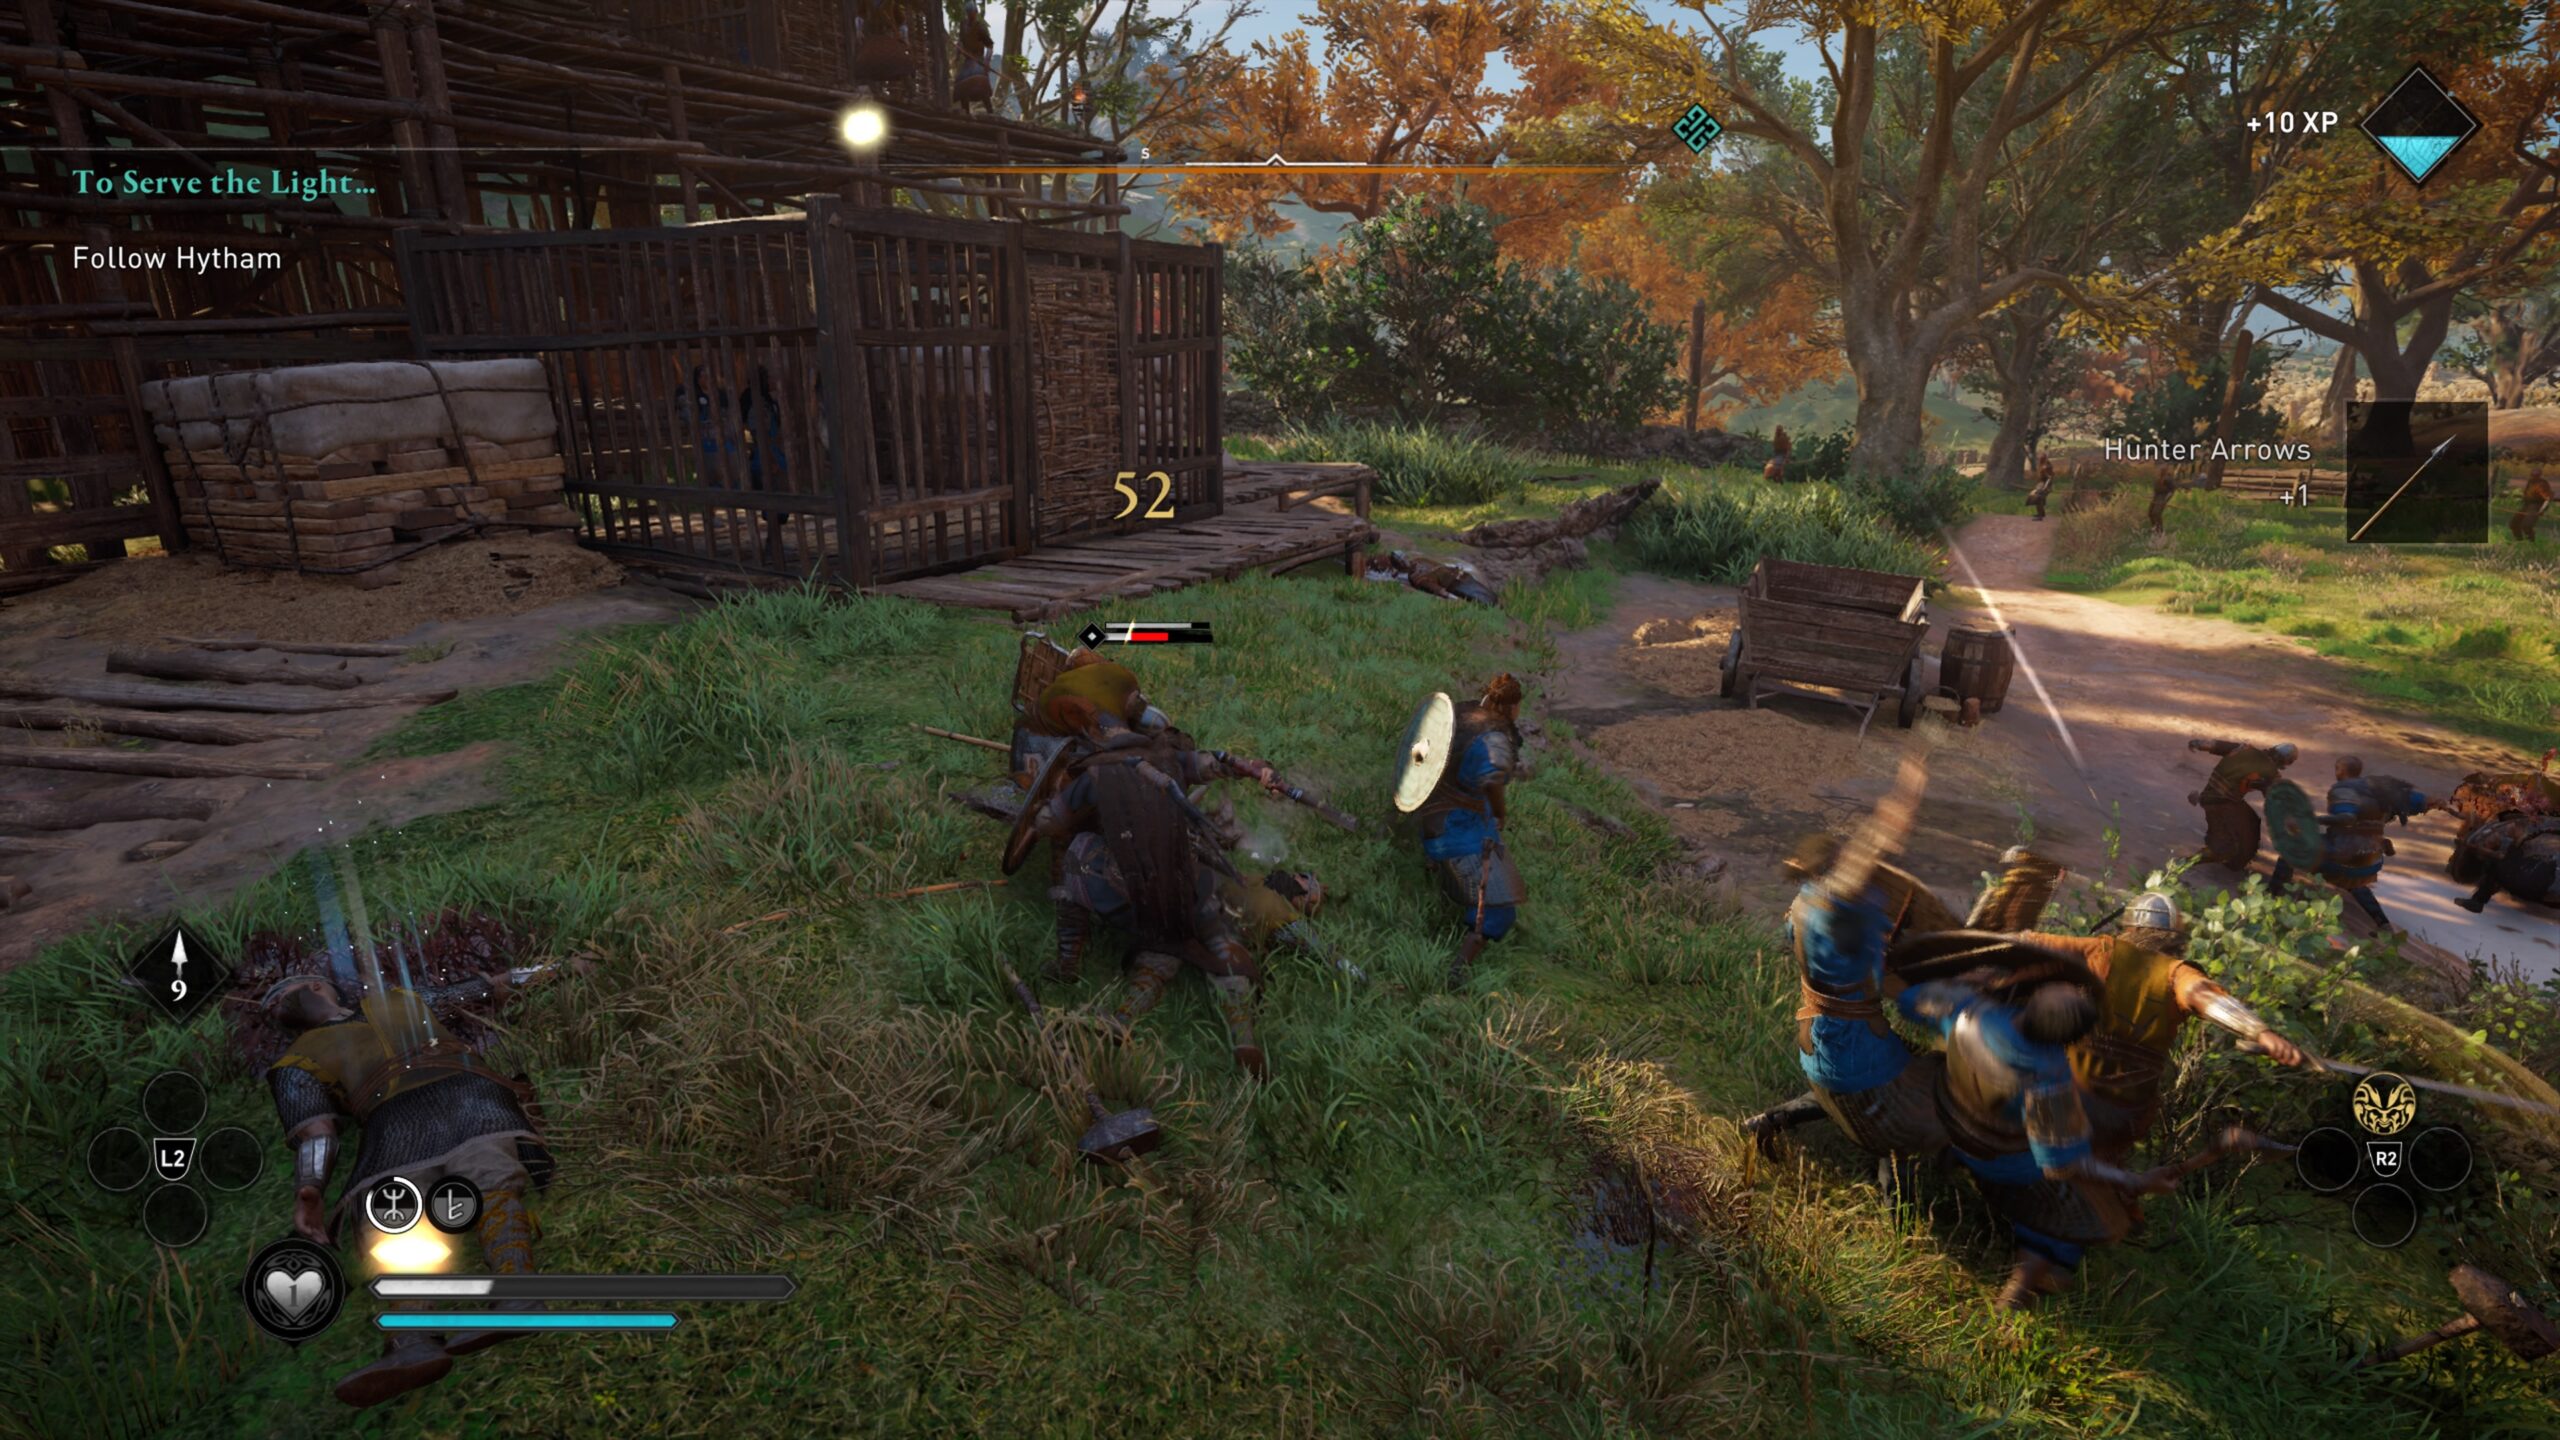 Assassin's Creed Valhalla Full Walkthrough Gameplay – PS4 Pro No